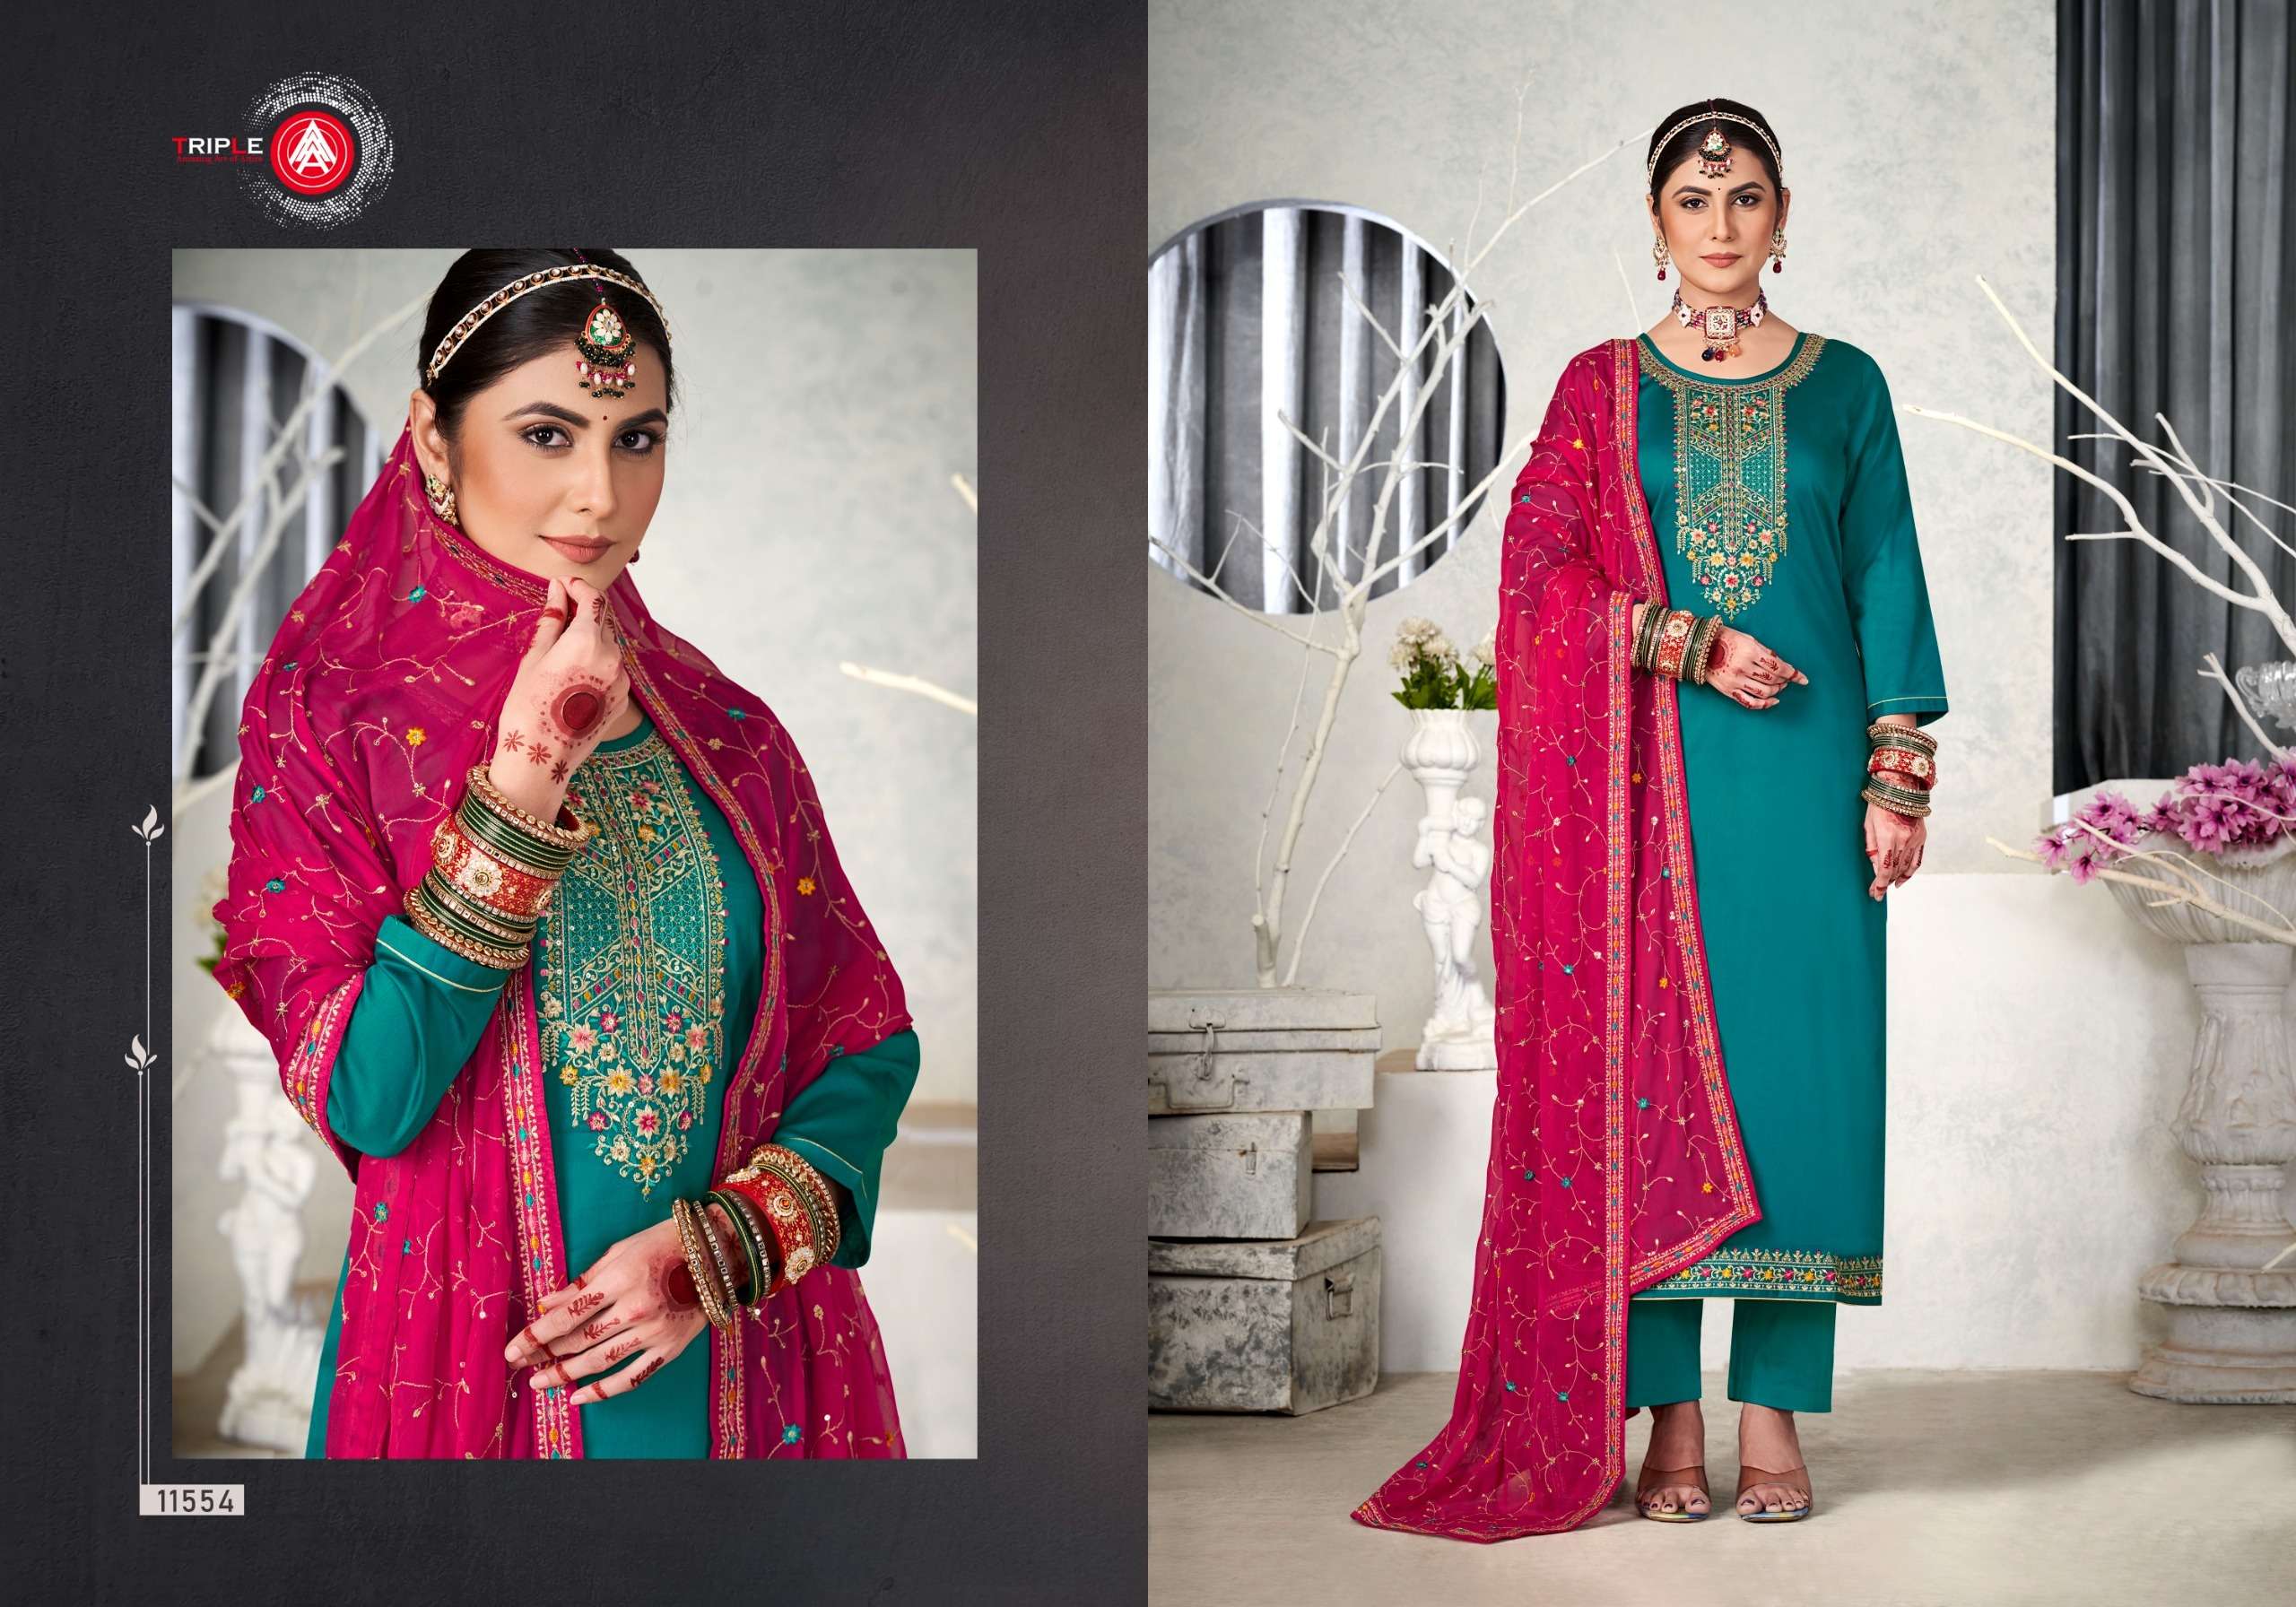 triple a laisaa 11551-11556 series latest wedding wear pakistani salwar kameez wholesaler surat